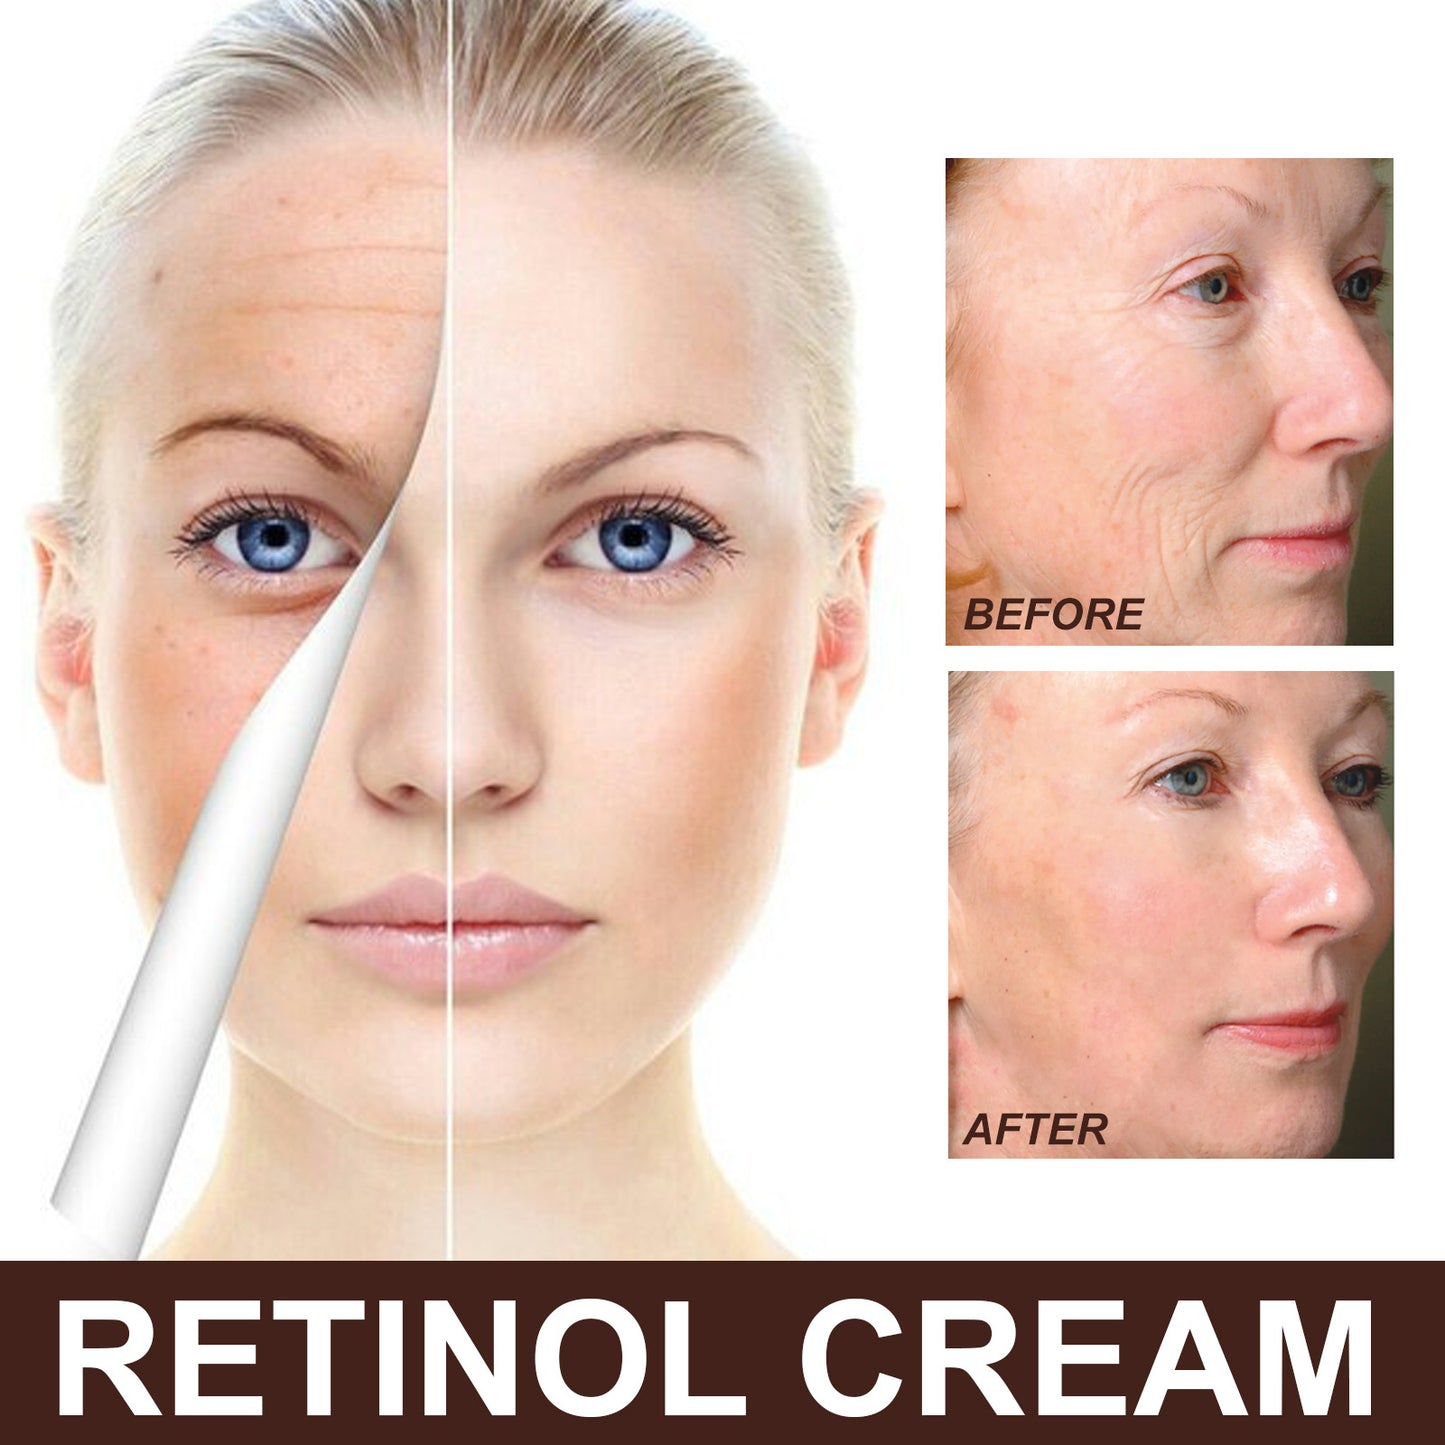 Eelhoe Retinol Anti Aging Face Cream Remove Wrinkle Firming Lifting Whitening Brightening Moisturizing Facial Skin Beauty Care